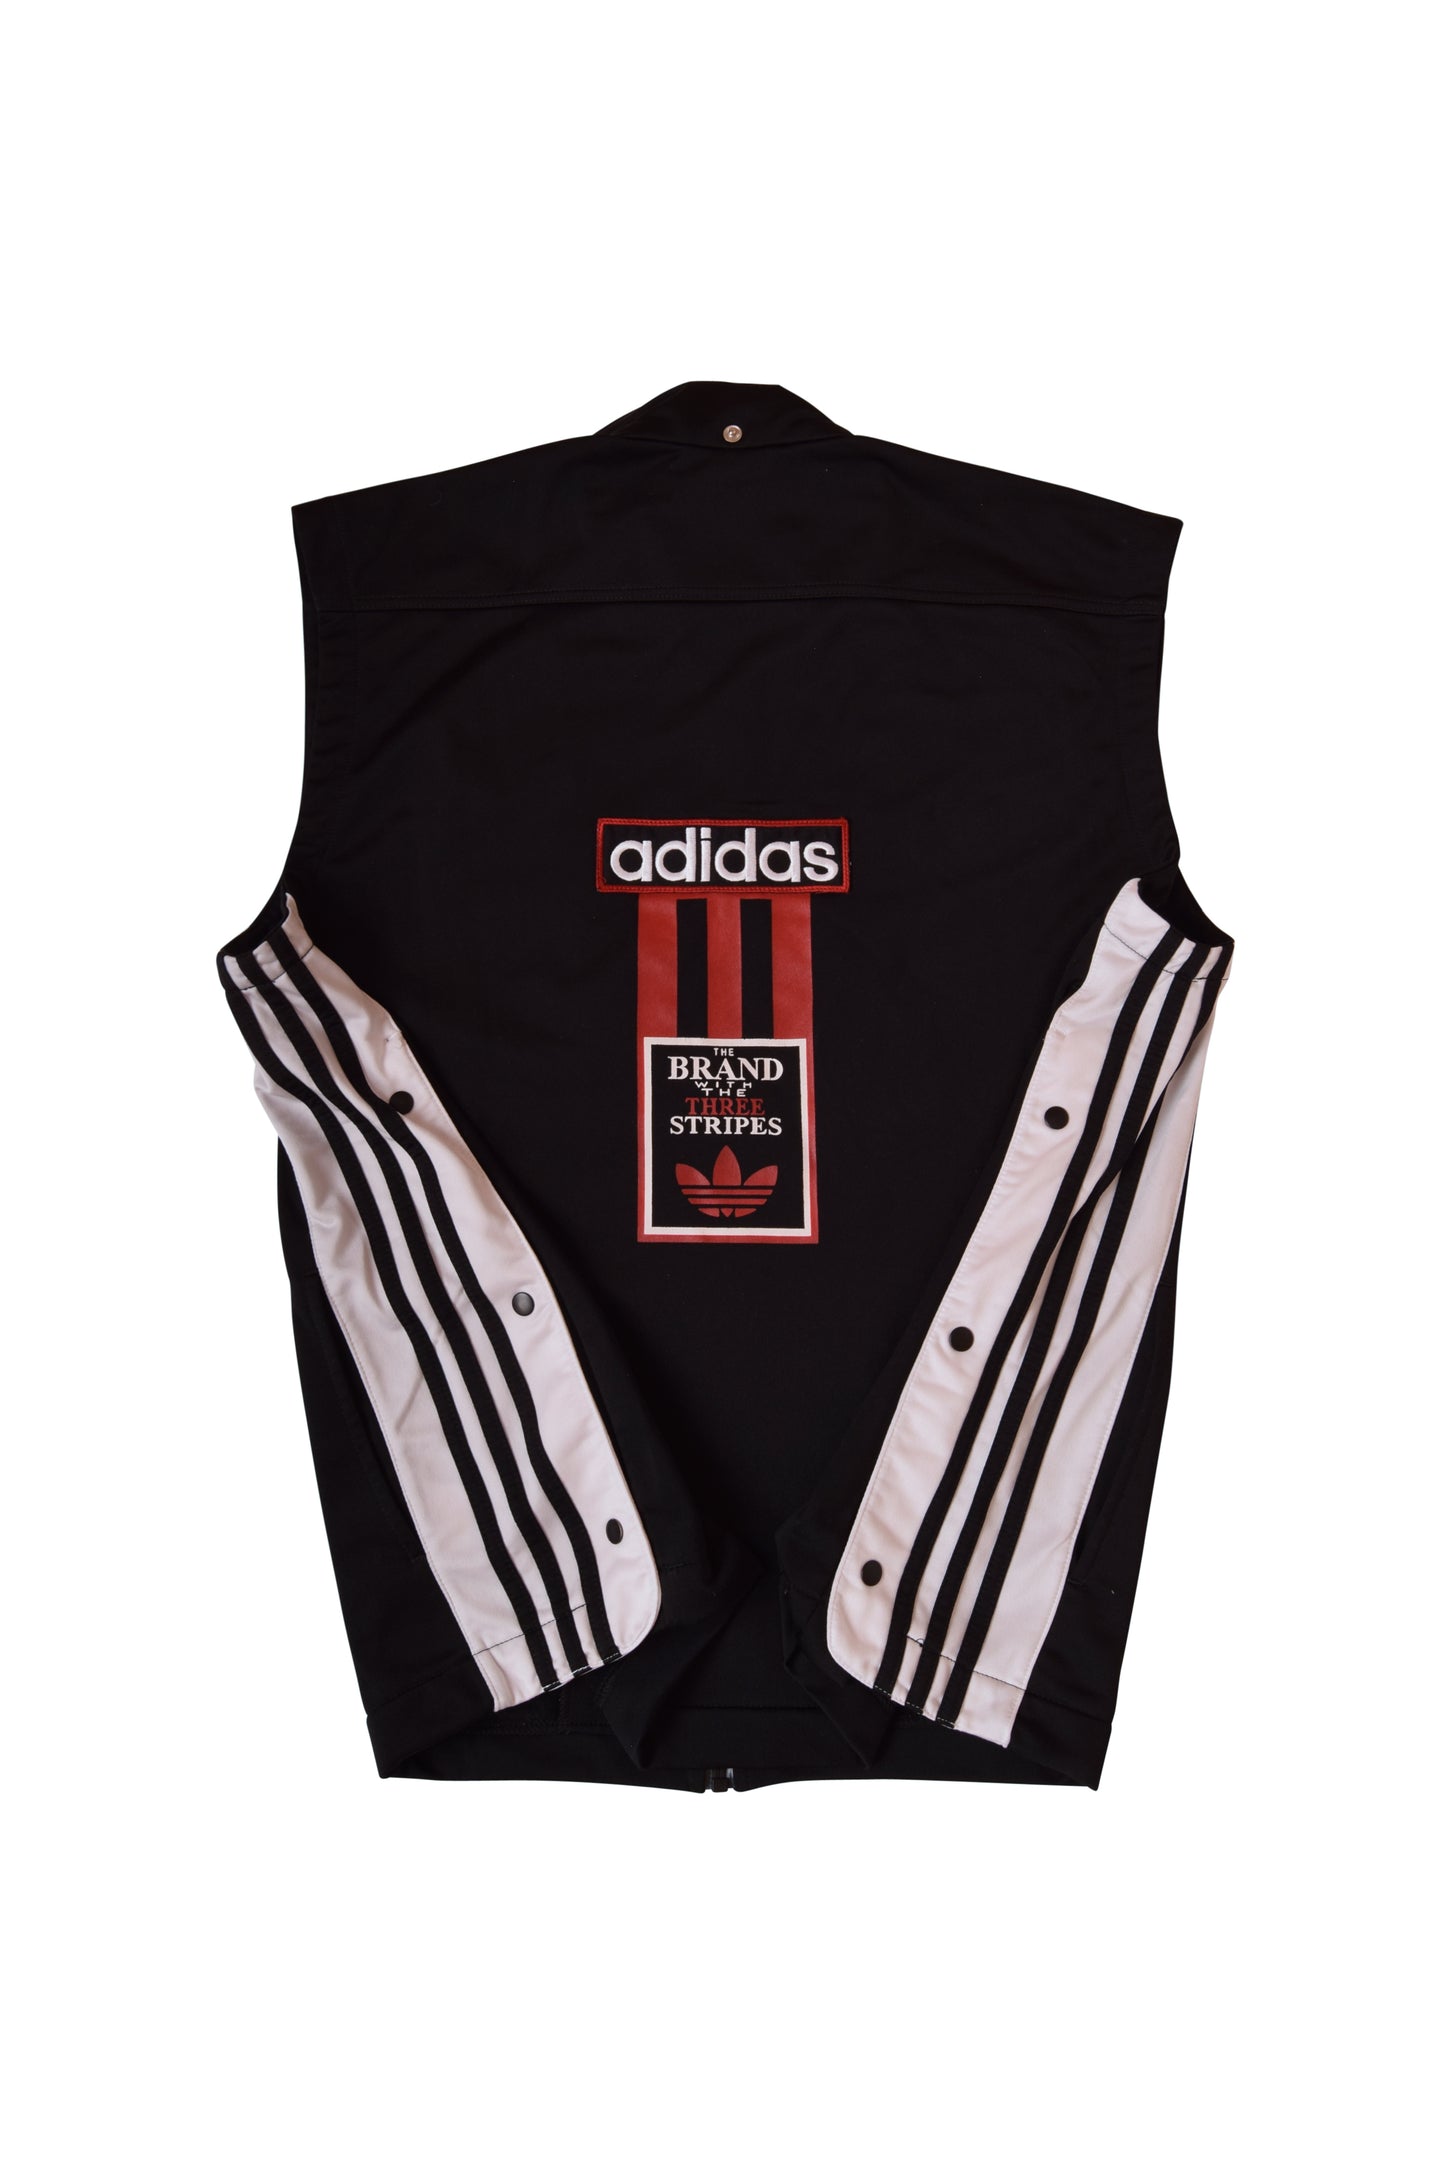 Vintage 90's Adidas Vest with Staples Size L